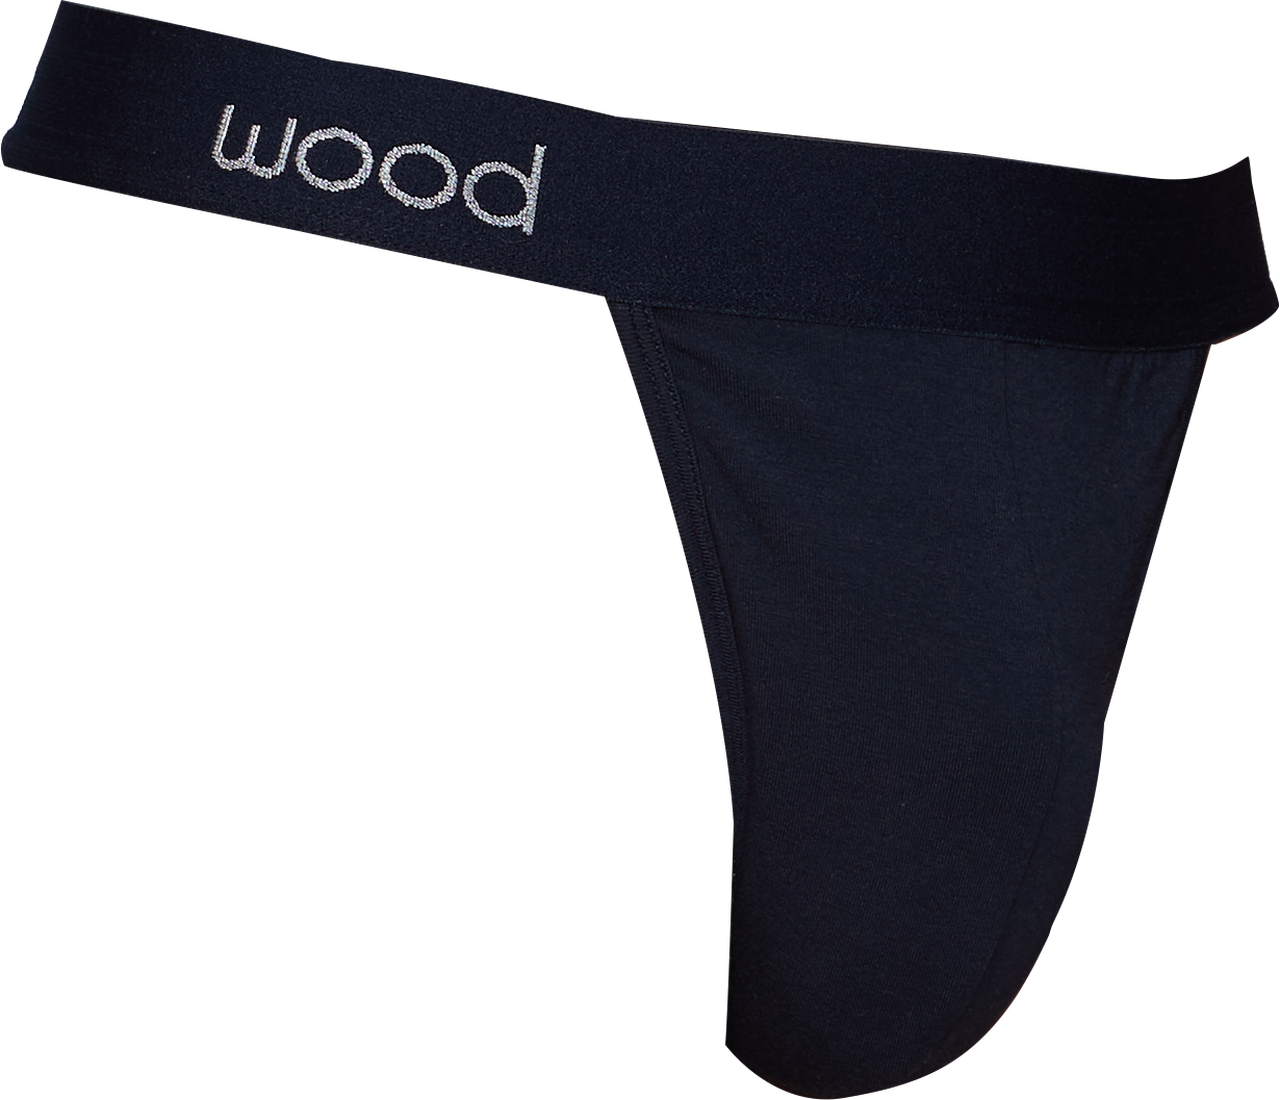 Thong in Black by Wood Underwear